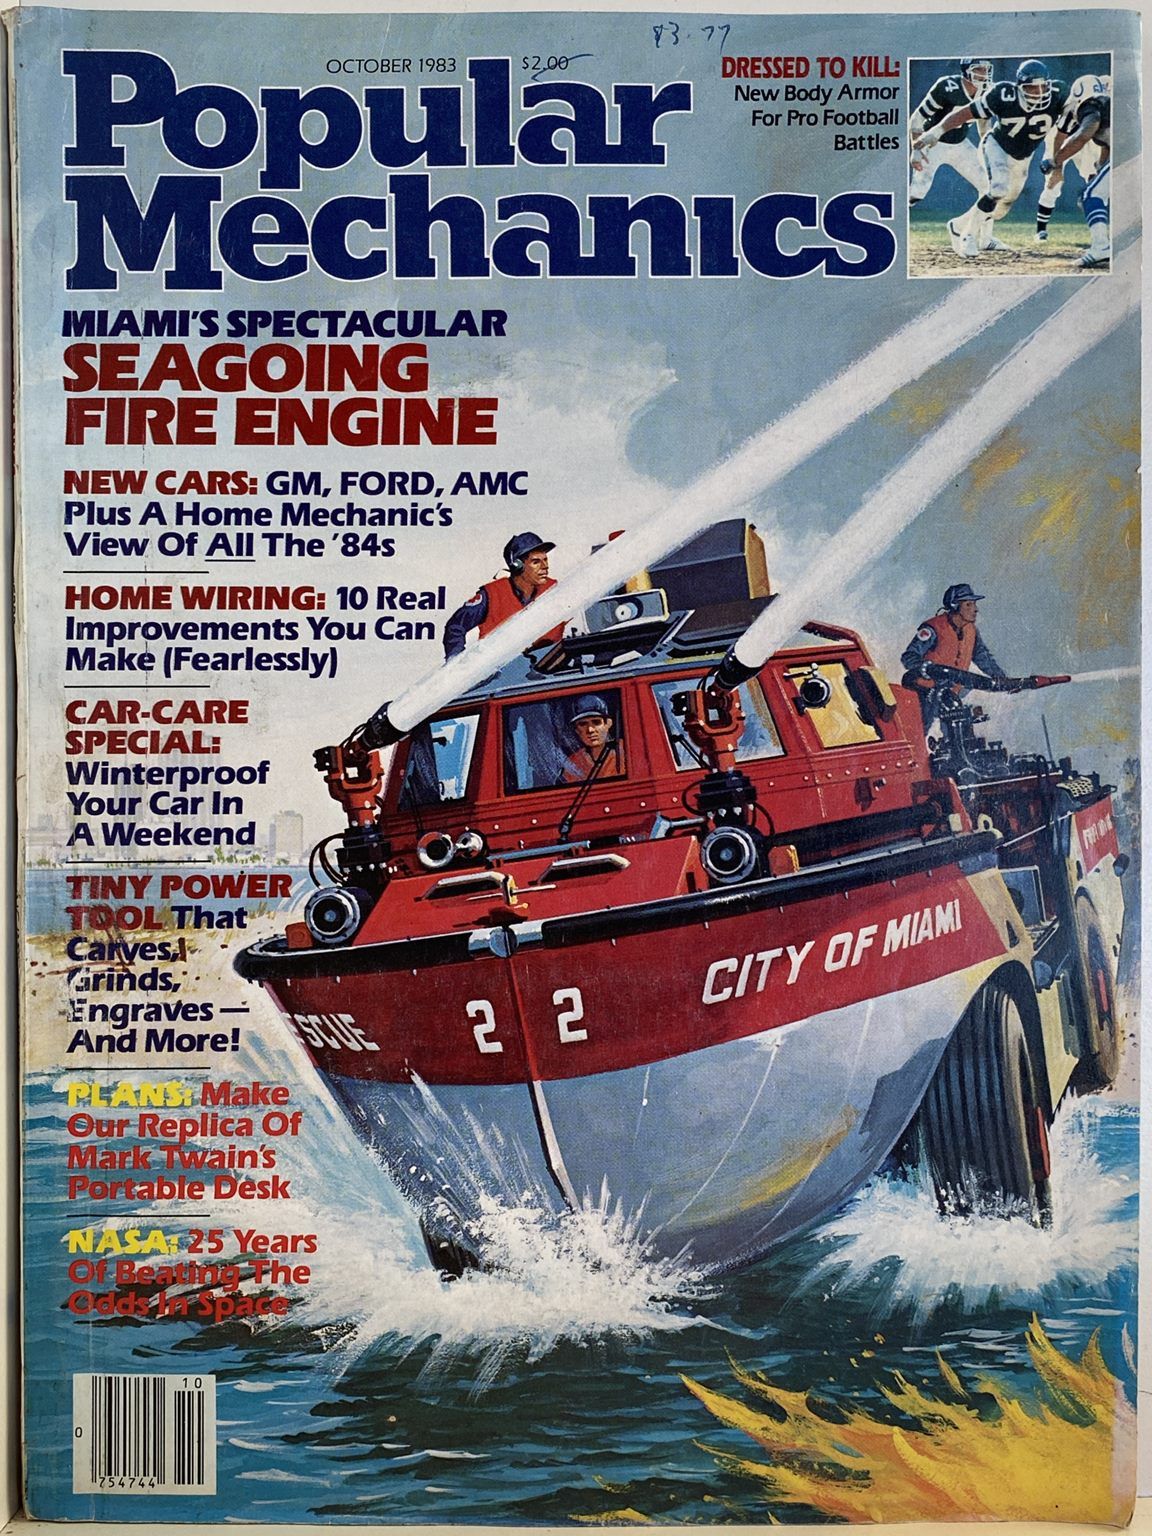 VINTAGE MAGAZINE: Popular Mechanics - Vol. 160, No. 4 - October 1983